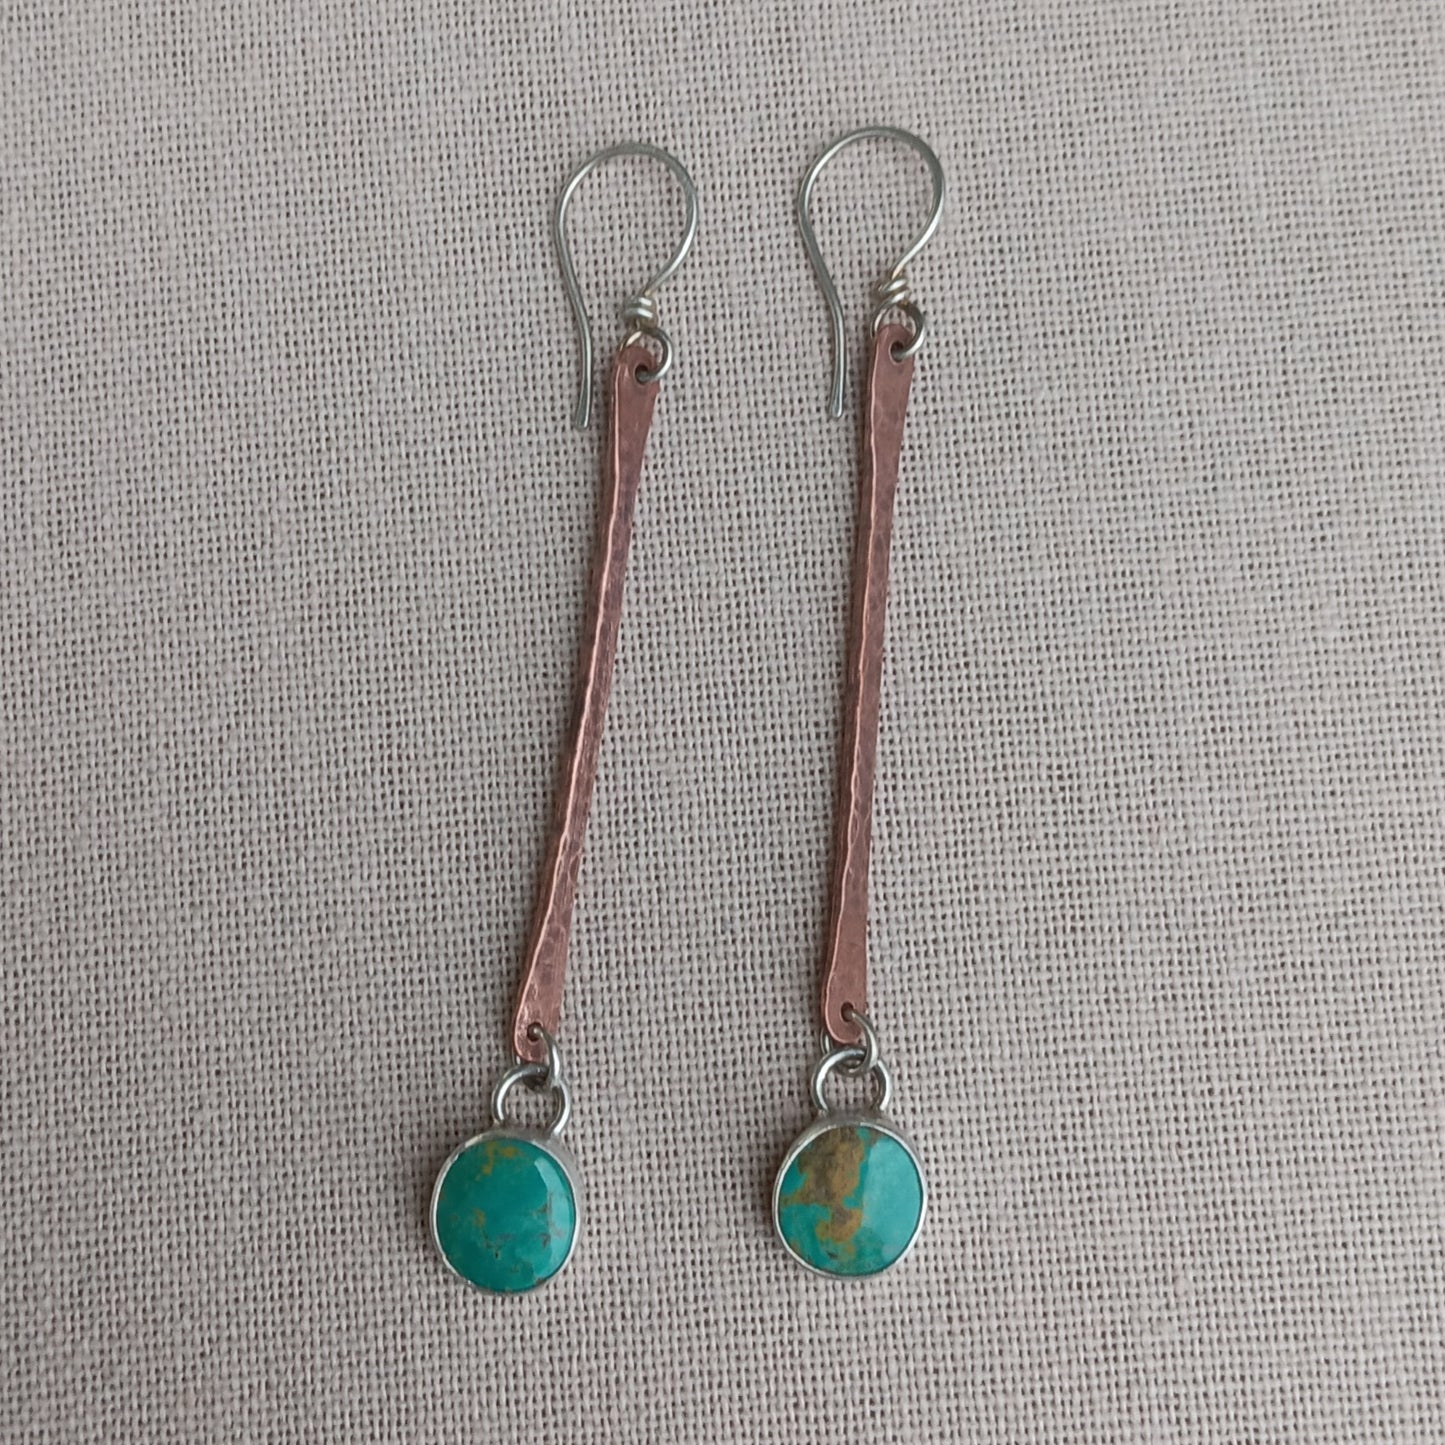 Kingman Turquoise and Reclaimed Copper Earrings